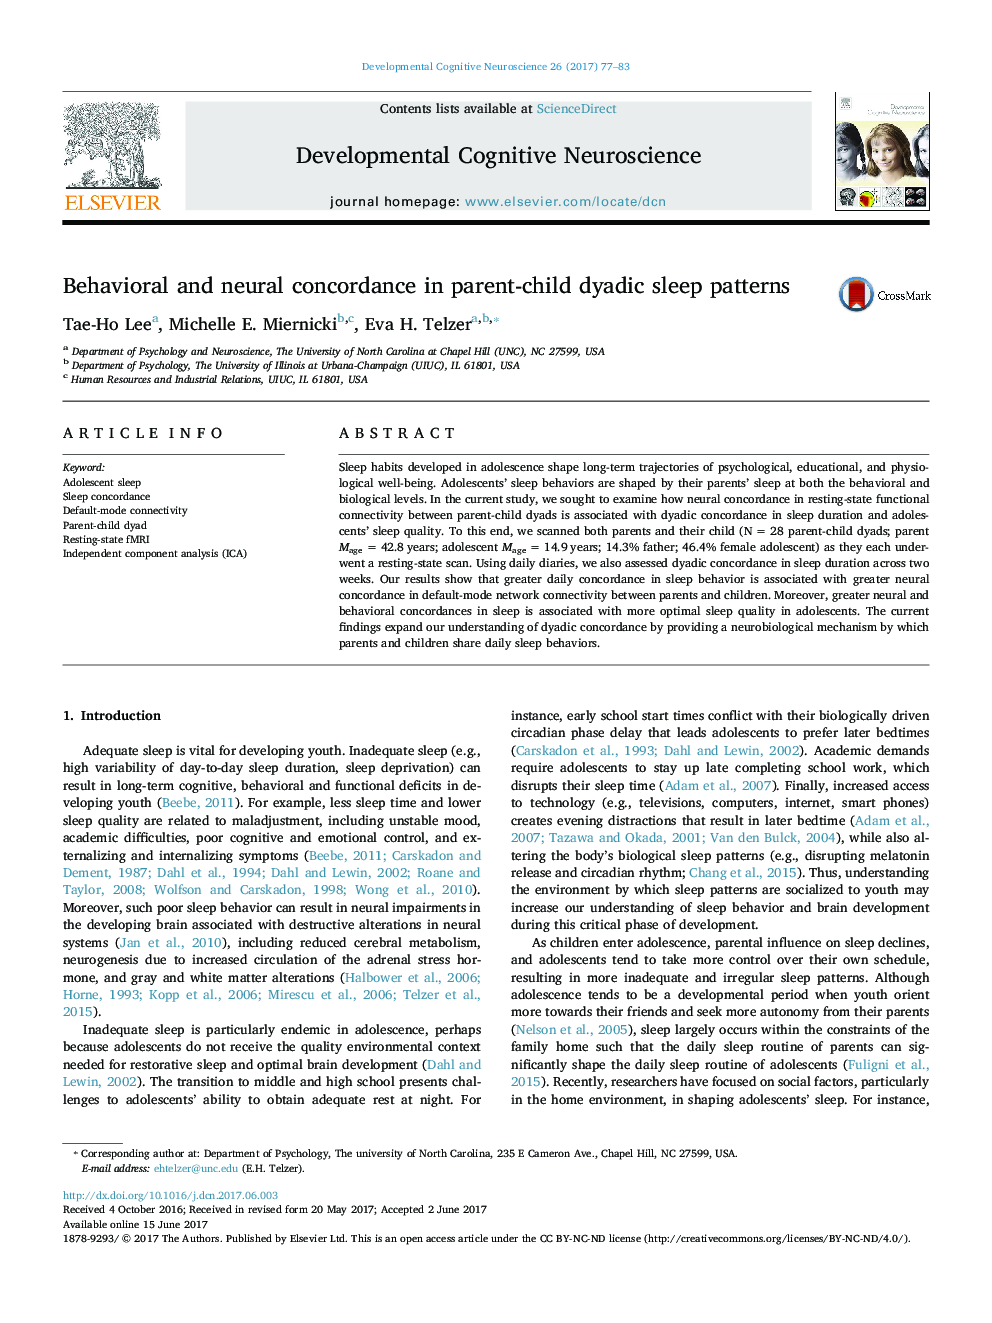 Behavioral and neural concordance in parent-child dyadic sleep patterns